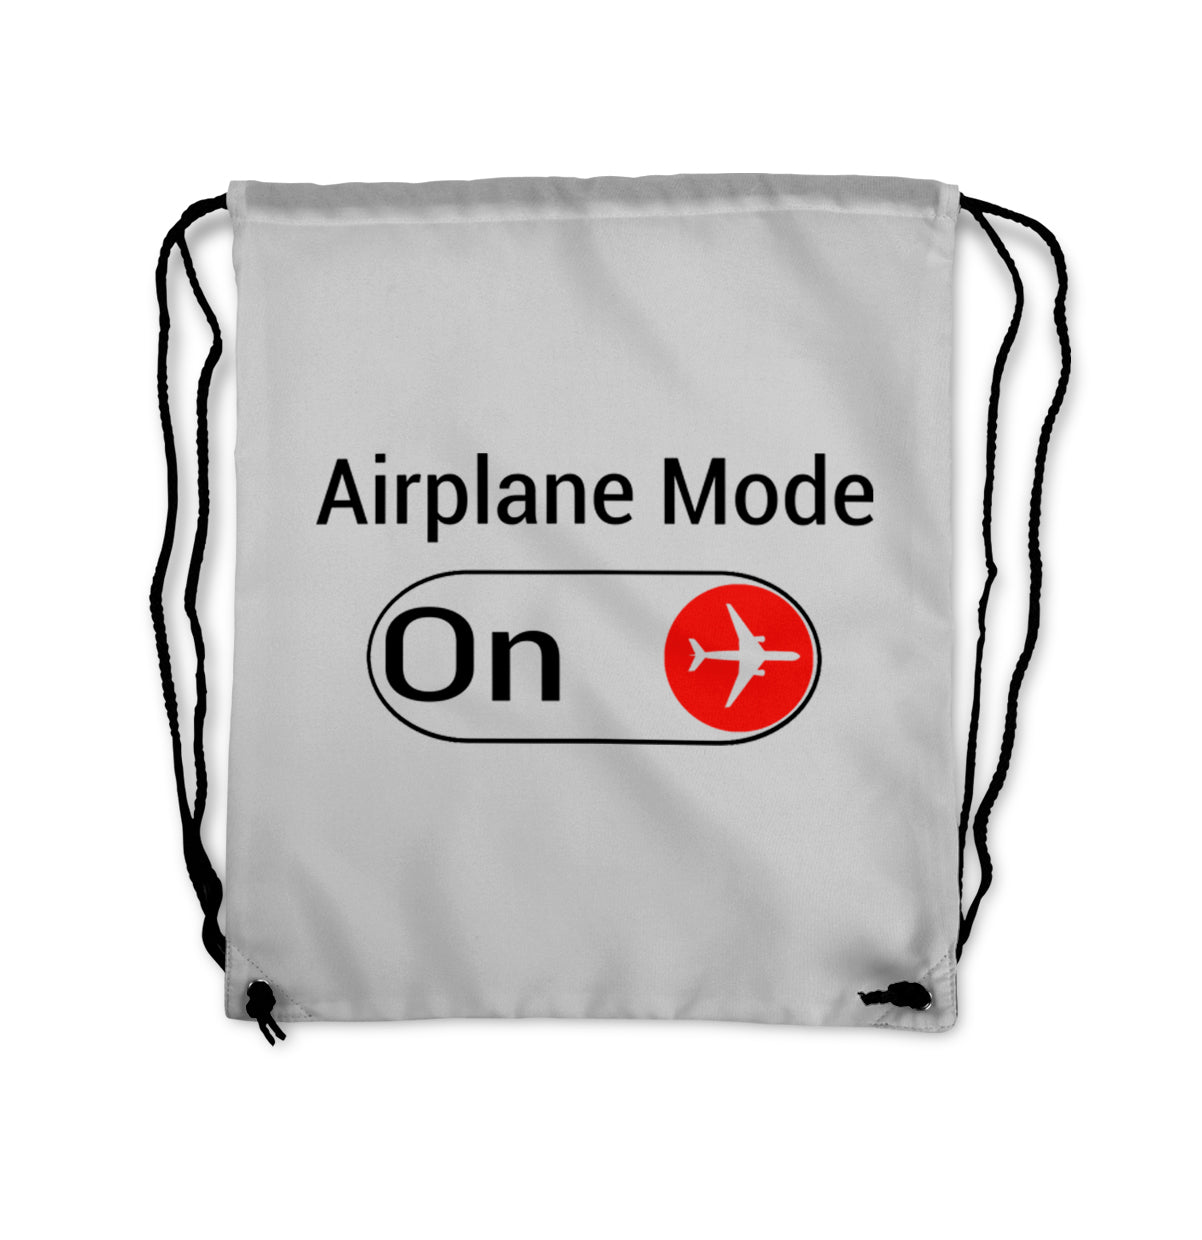 Airplane Mode On Designed Drawstring Bags